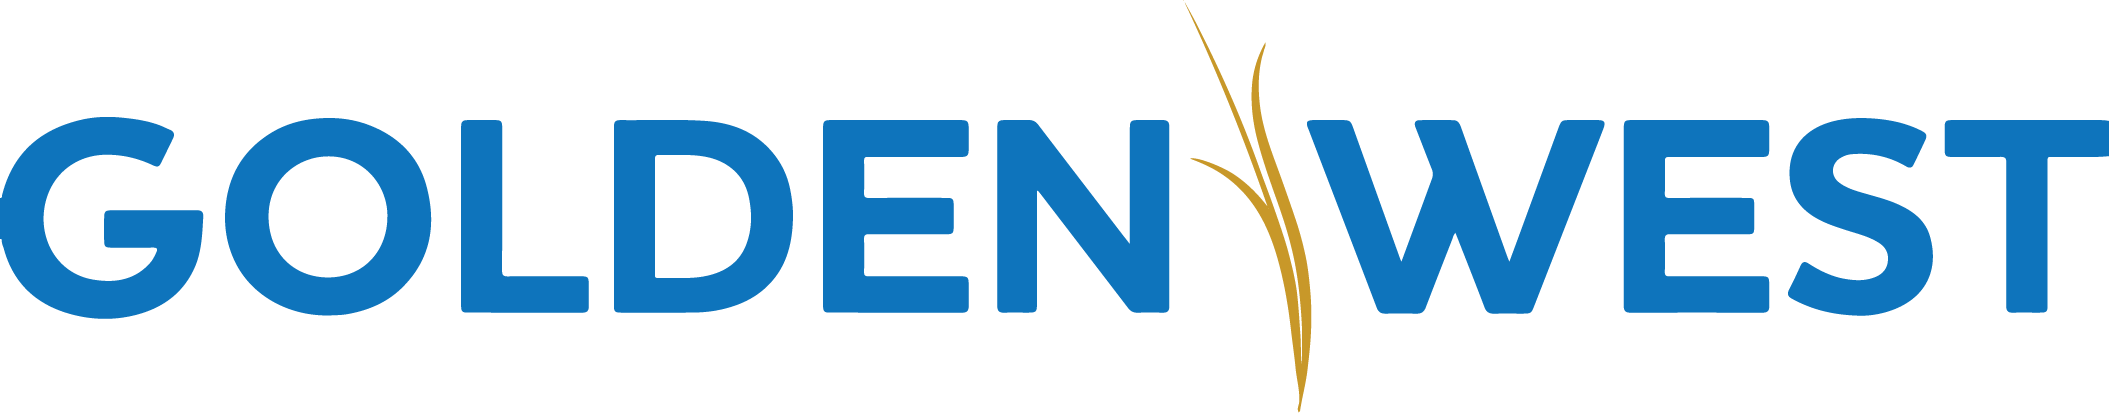 Golden West Radio Logo.png